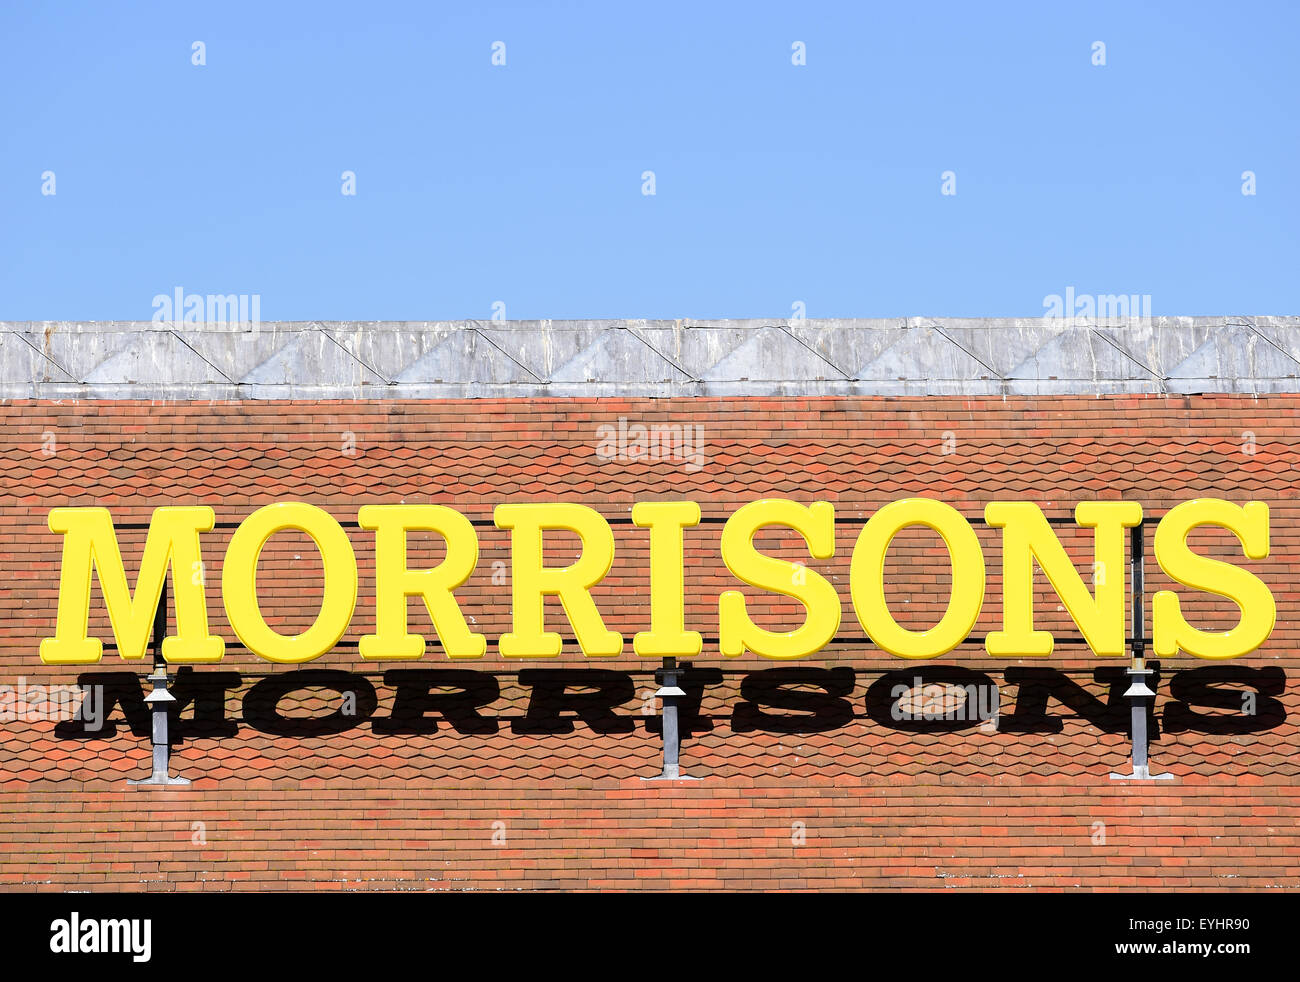 Morrisons supermarket sign Stock Photo